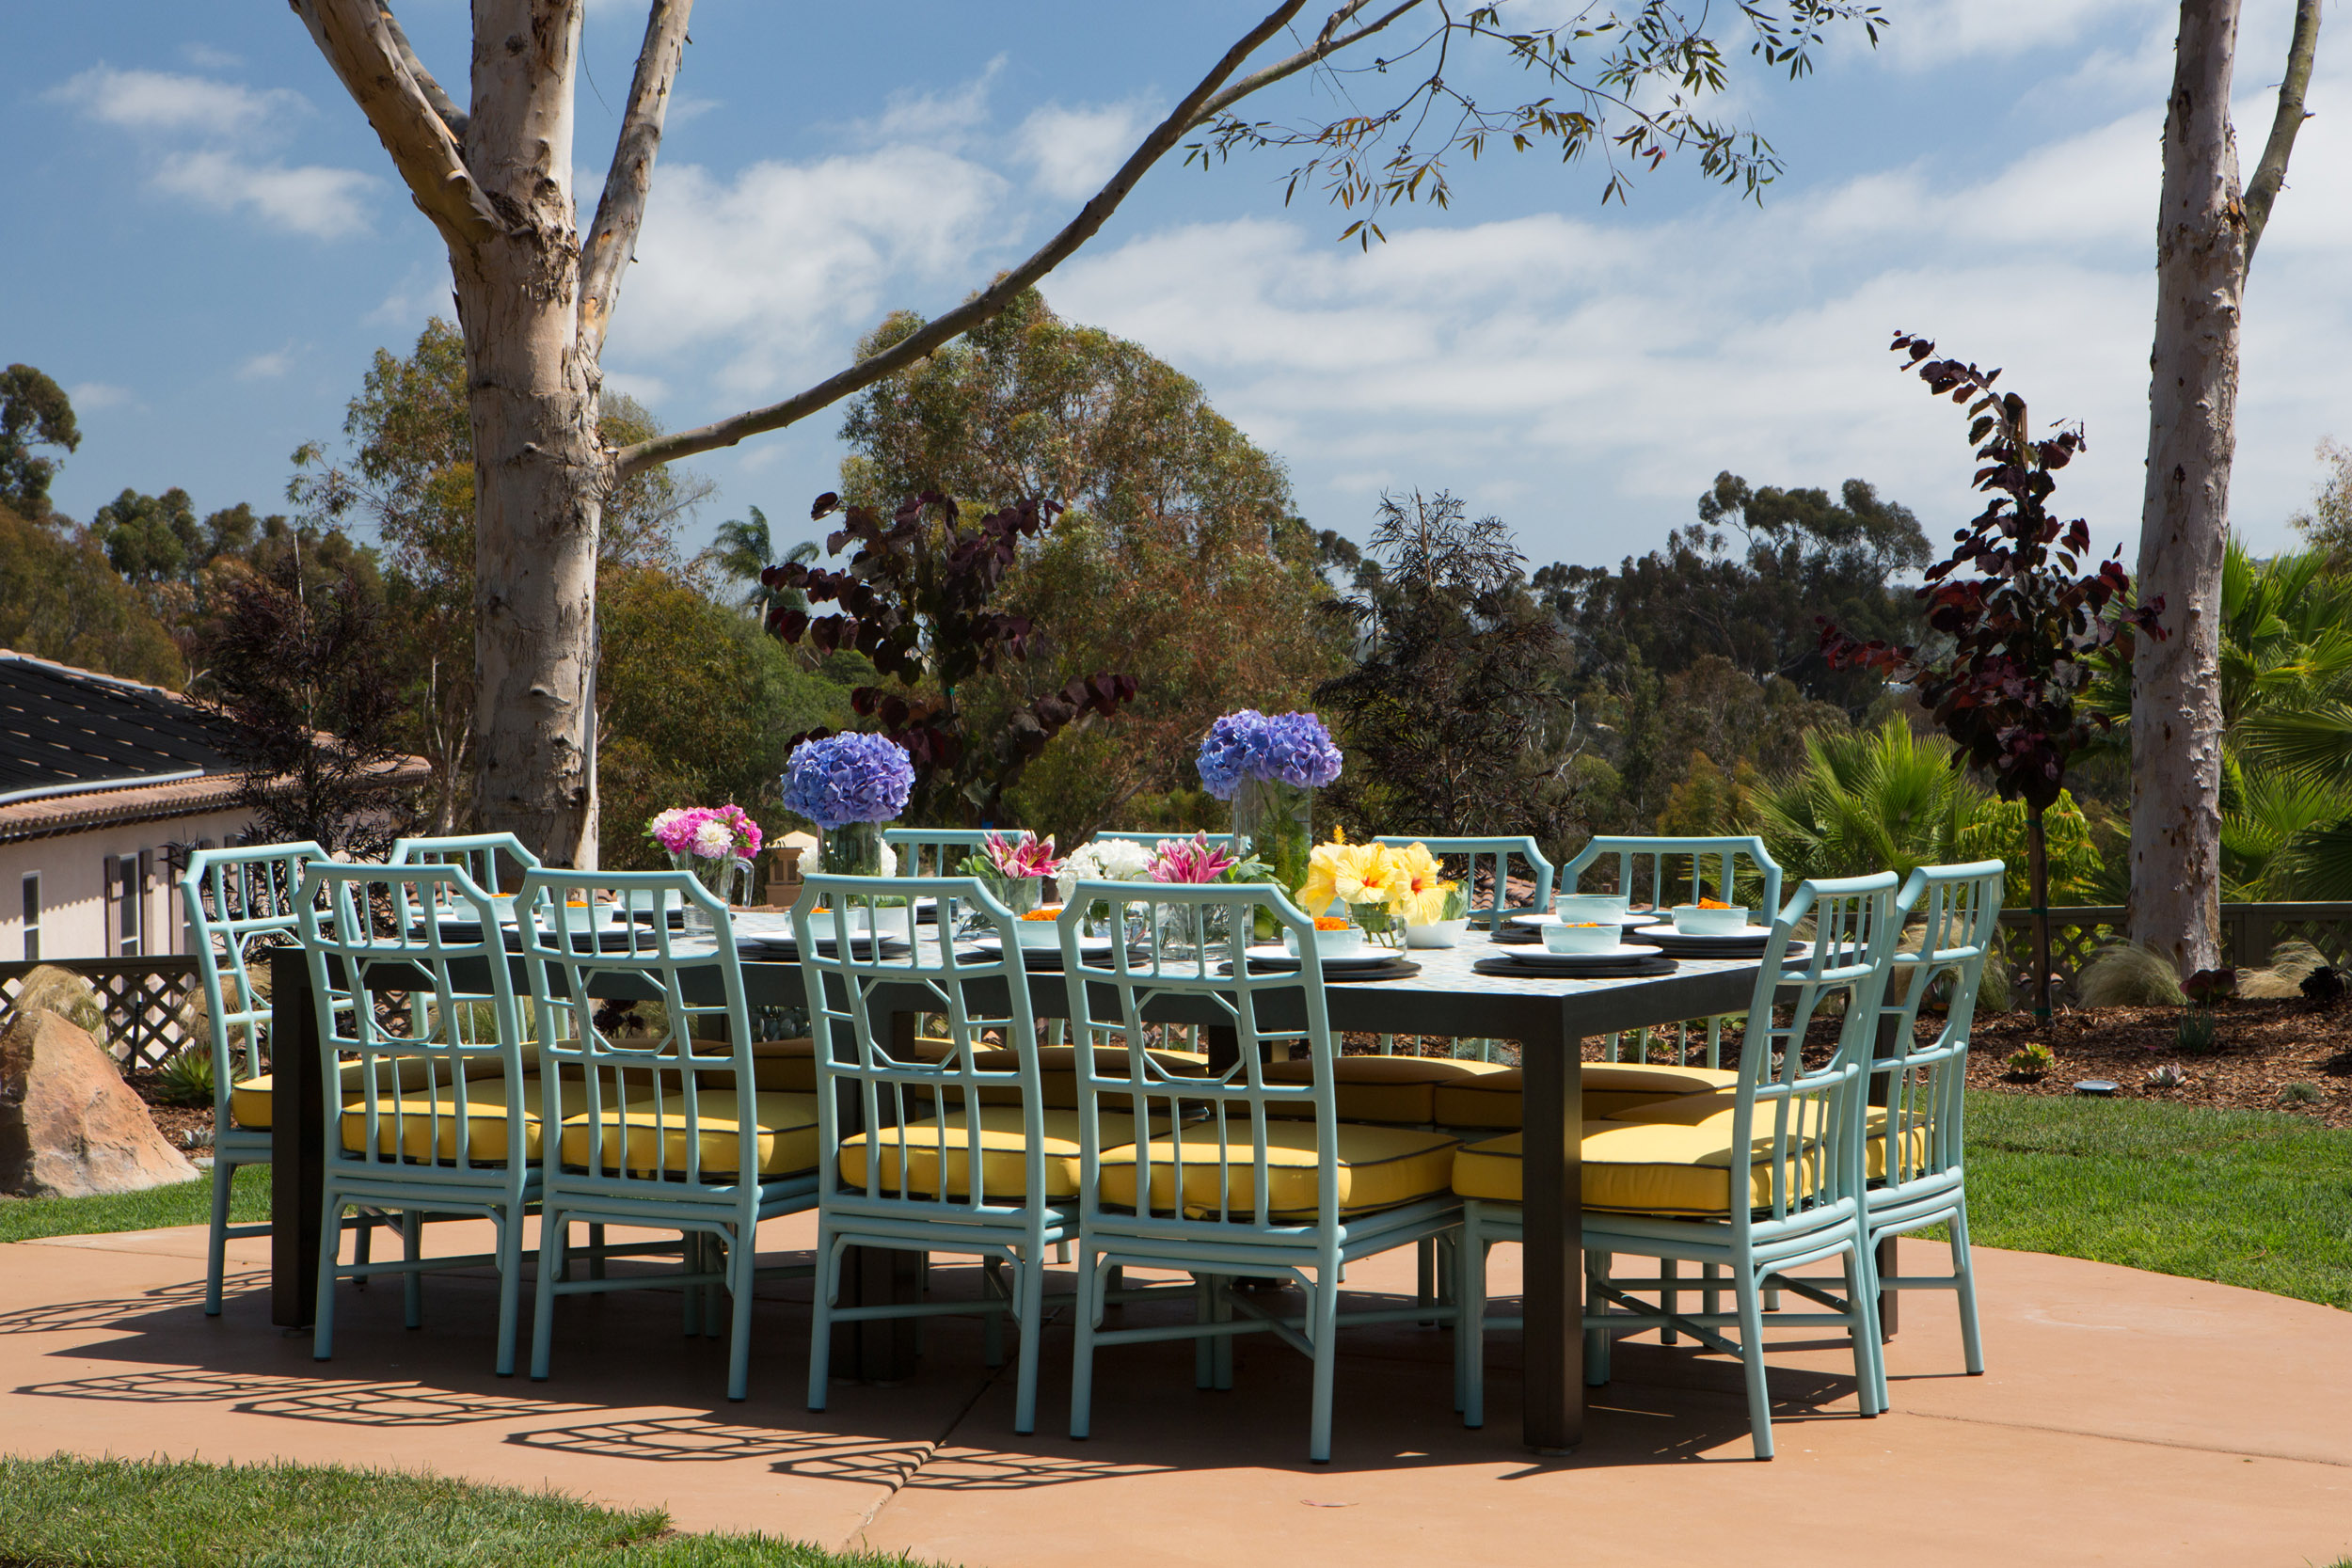 Spring Outdoor Dining Tablescape by Lori Dennis celebrity interior designer